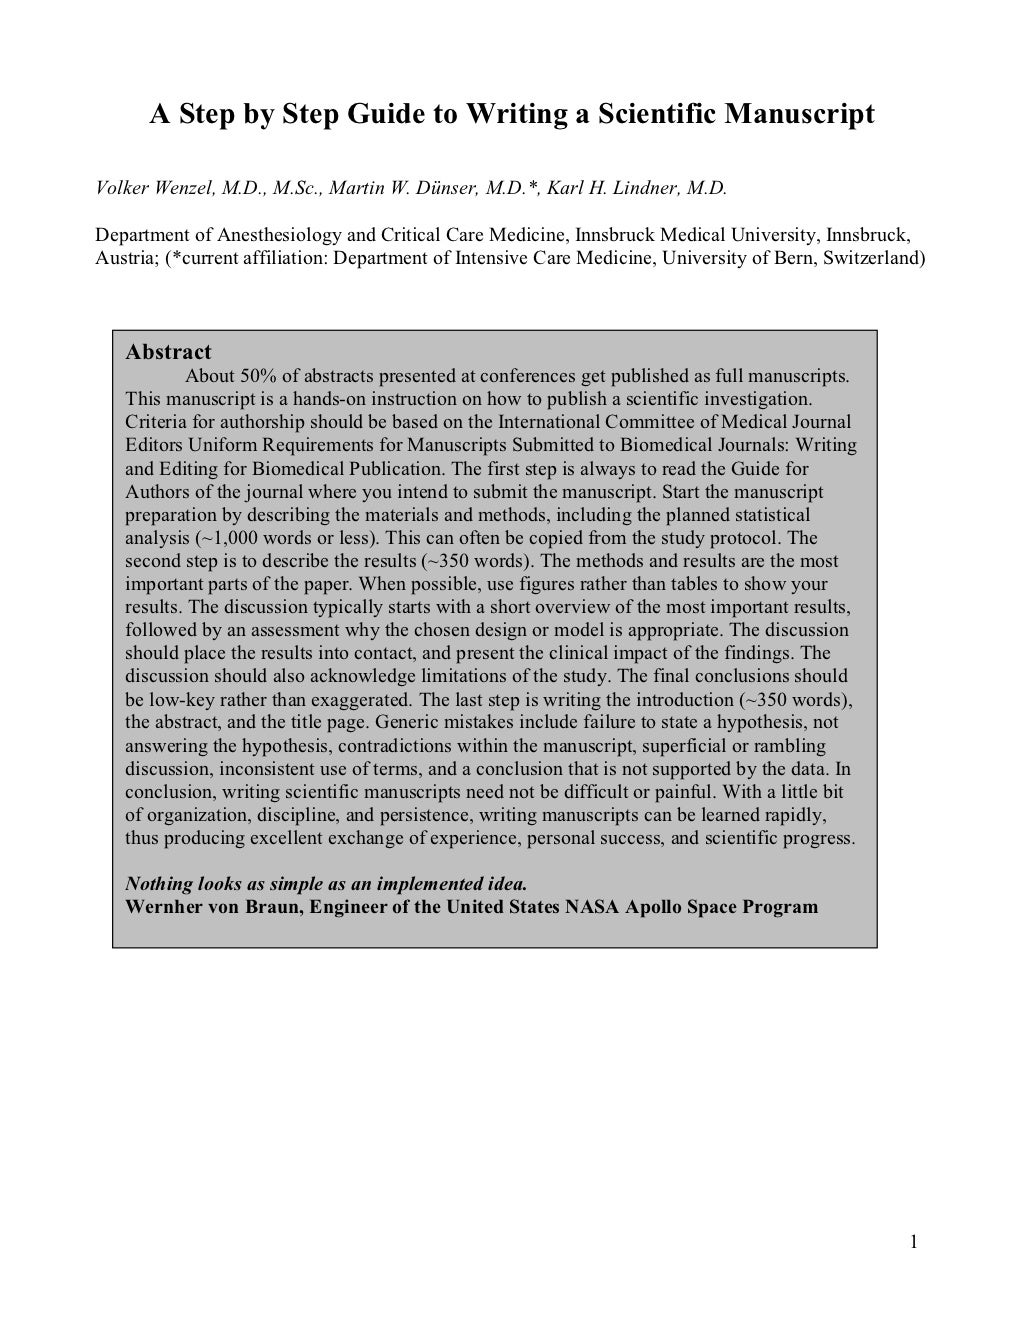 writing manuscript for publication in scientific journals